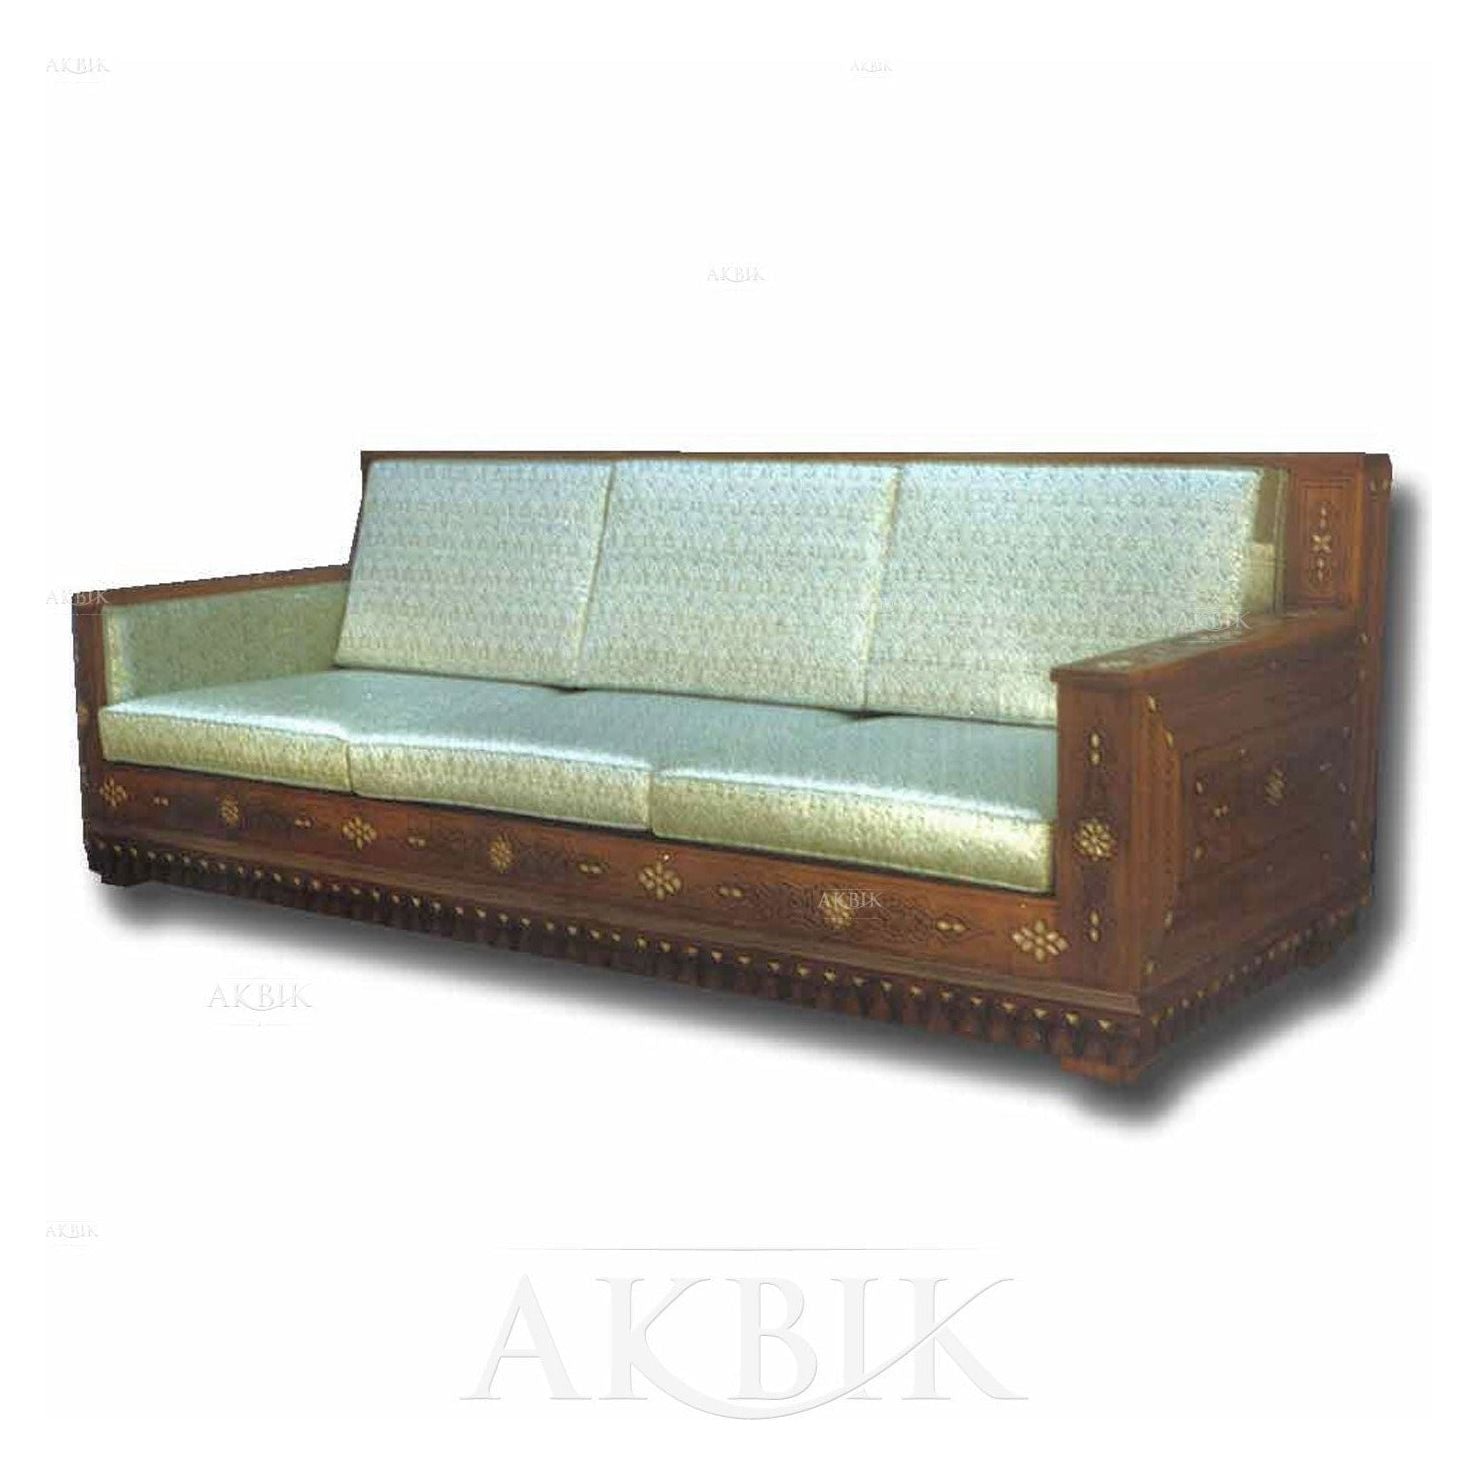 LEVANTINE COUCH/SOFA - AKBIK Furniture & Design